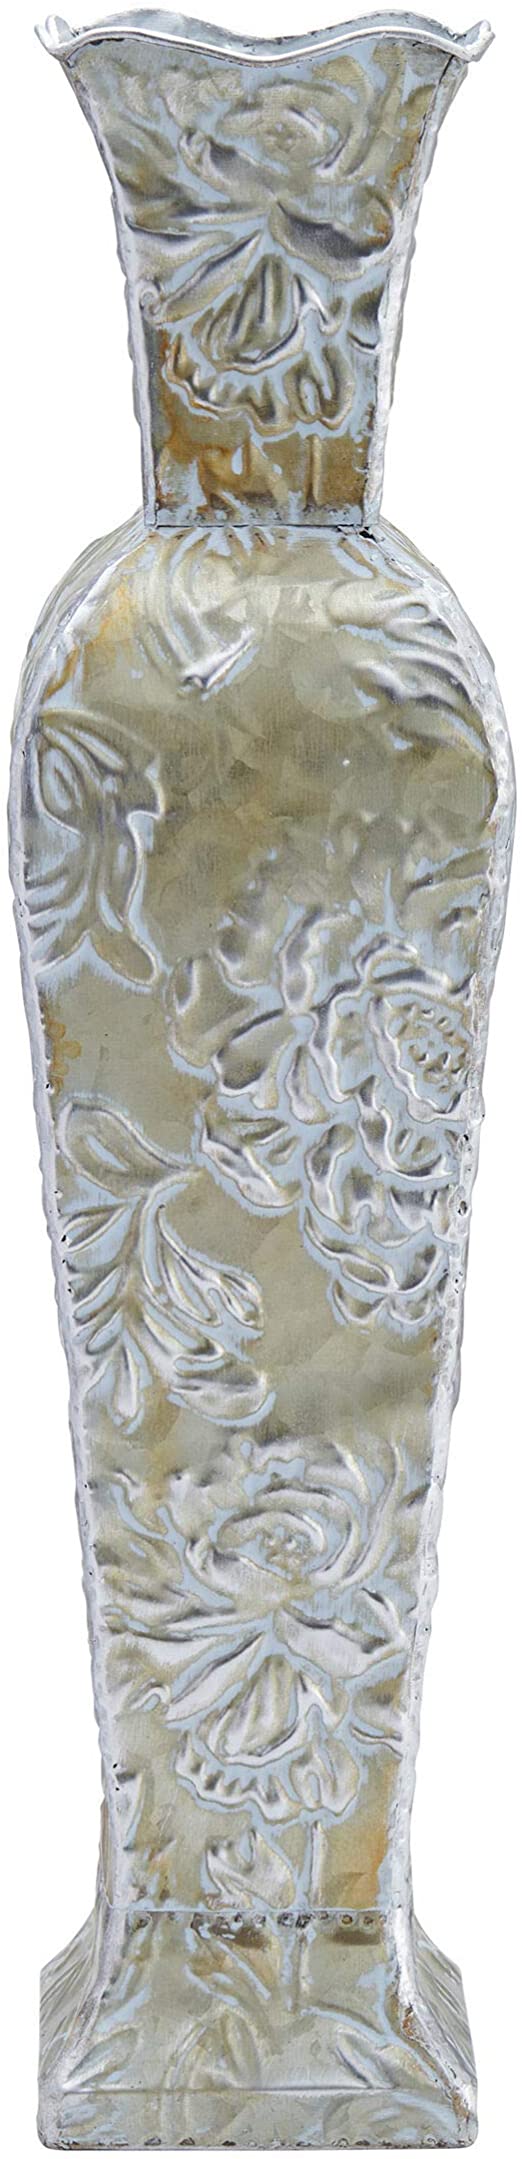 Elements Gold Floral Decorative Metal Vase, 20-Inch, Assorted